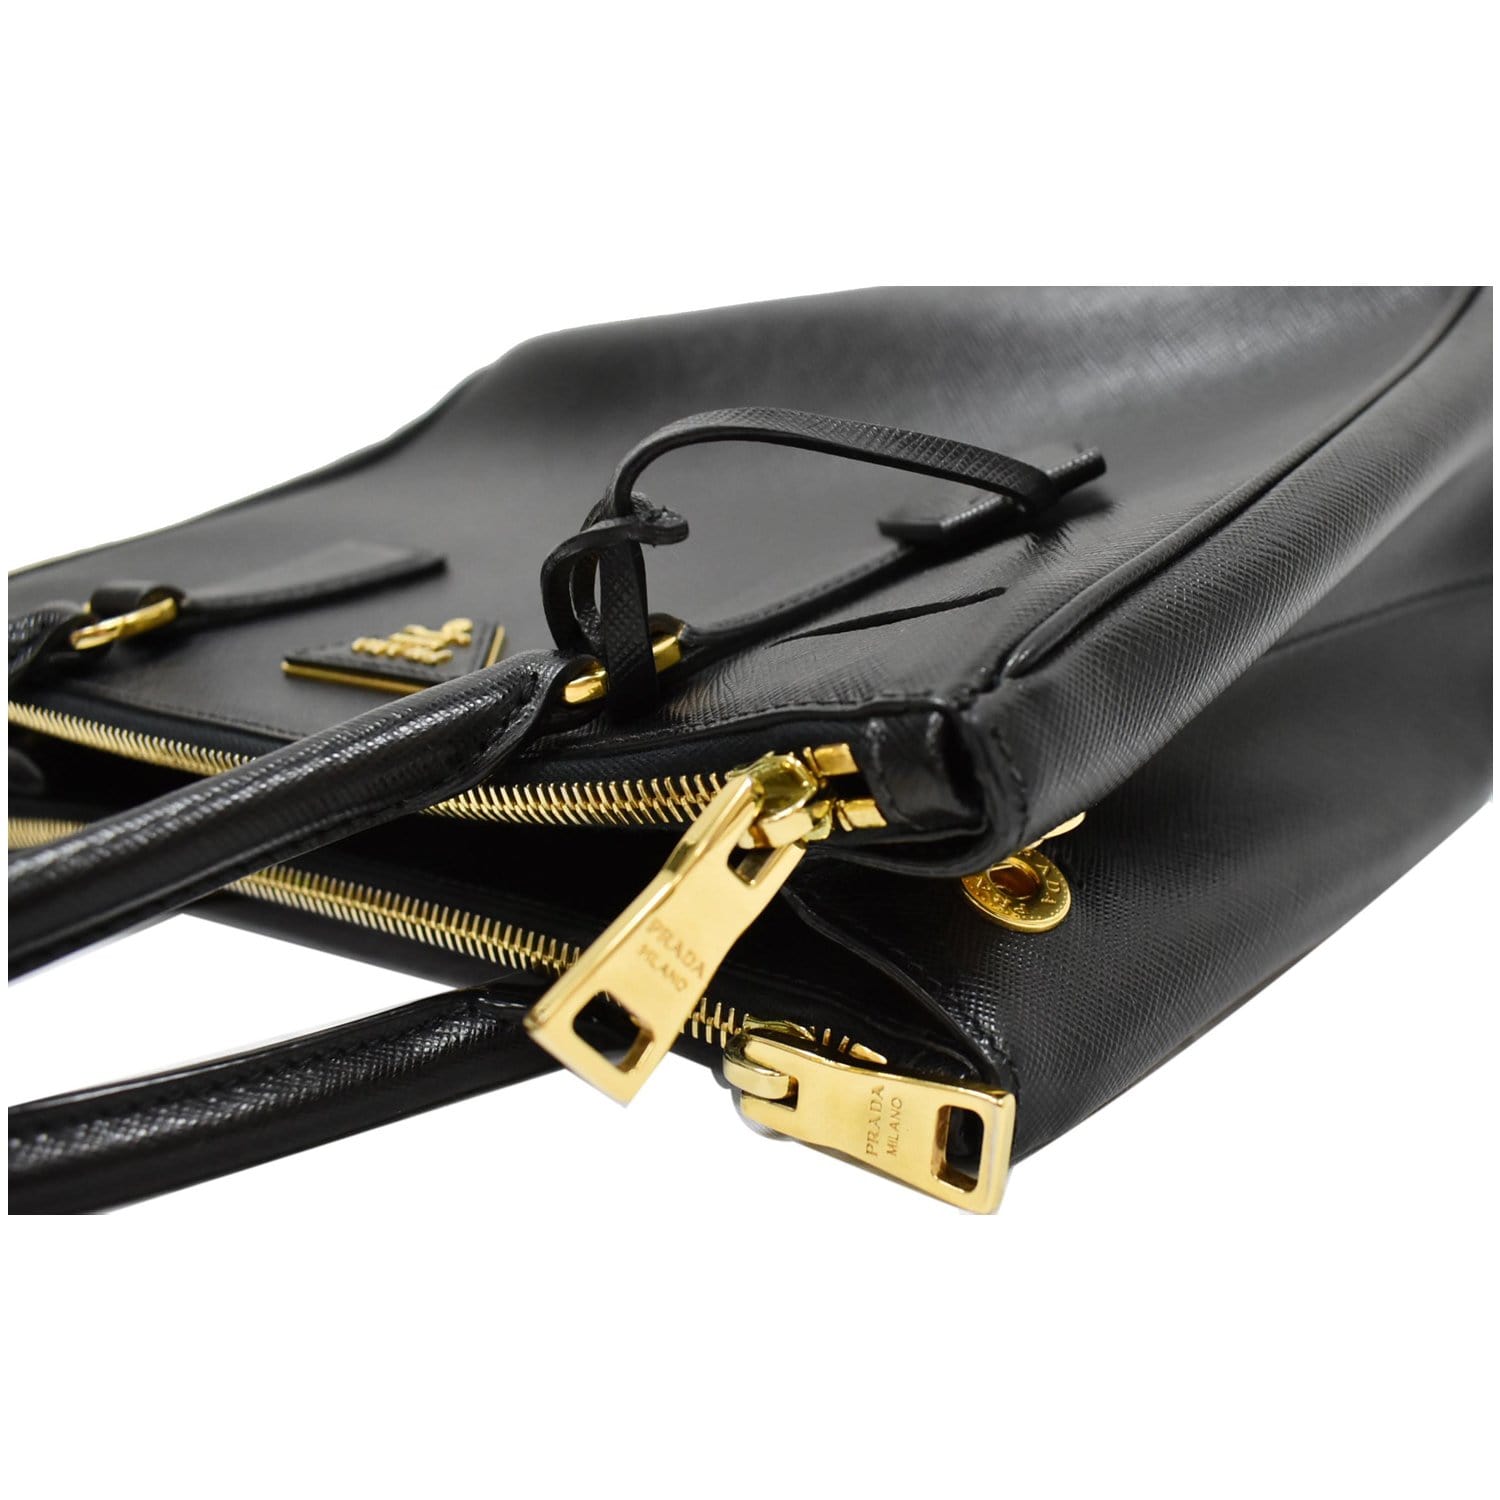 Prada Galleria Saffiano Leather Mini-bag - ShopStyle Shoulder Bags